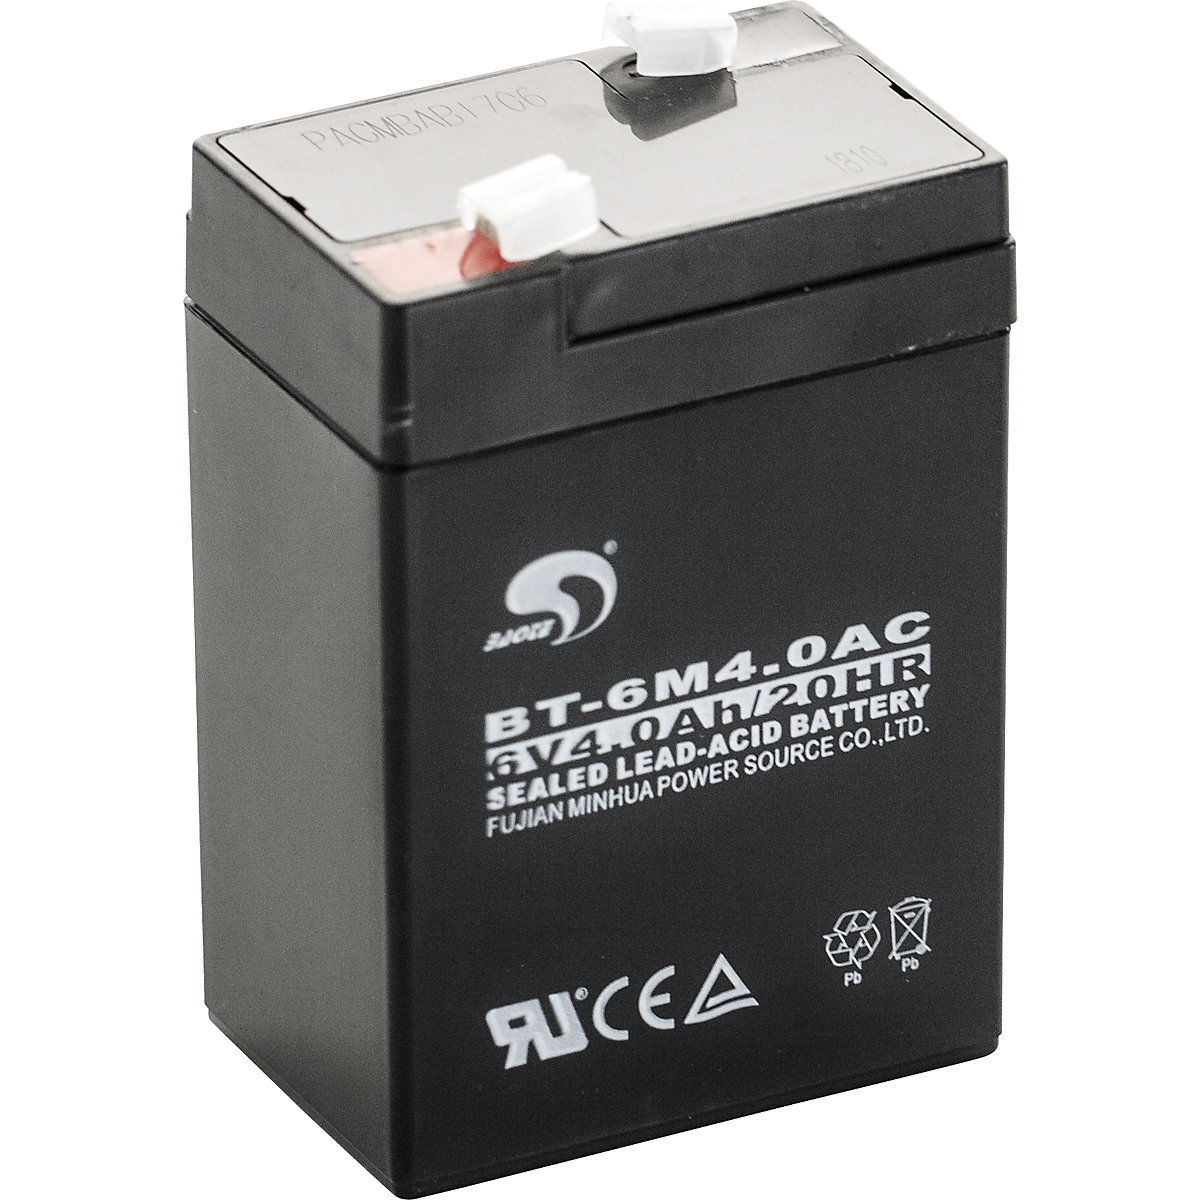 Rechargeable battery pack, internal - KERN